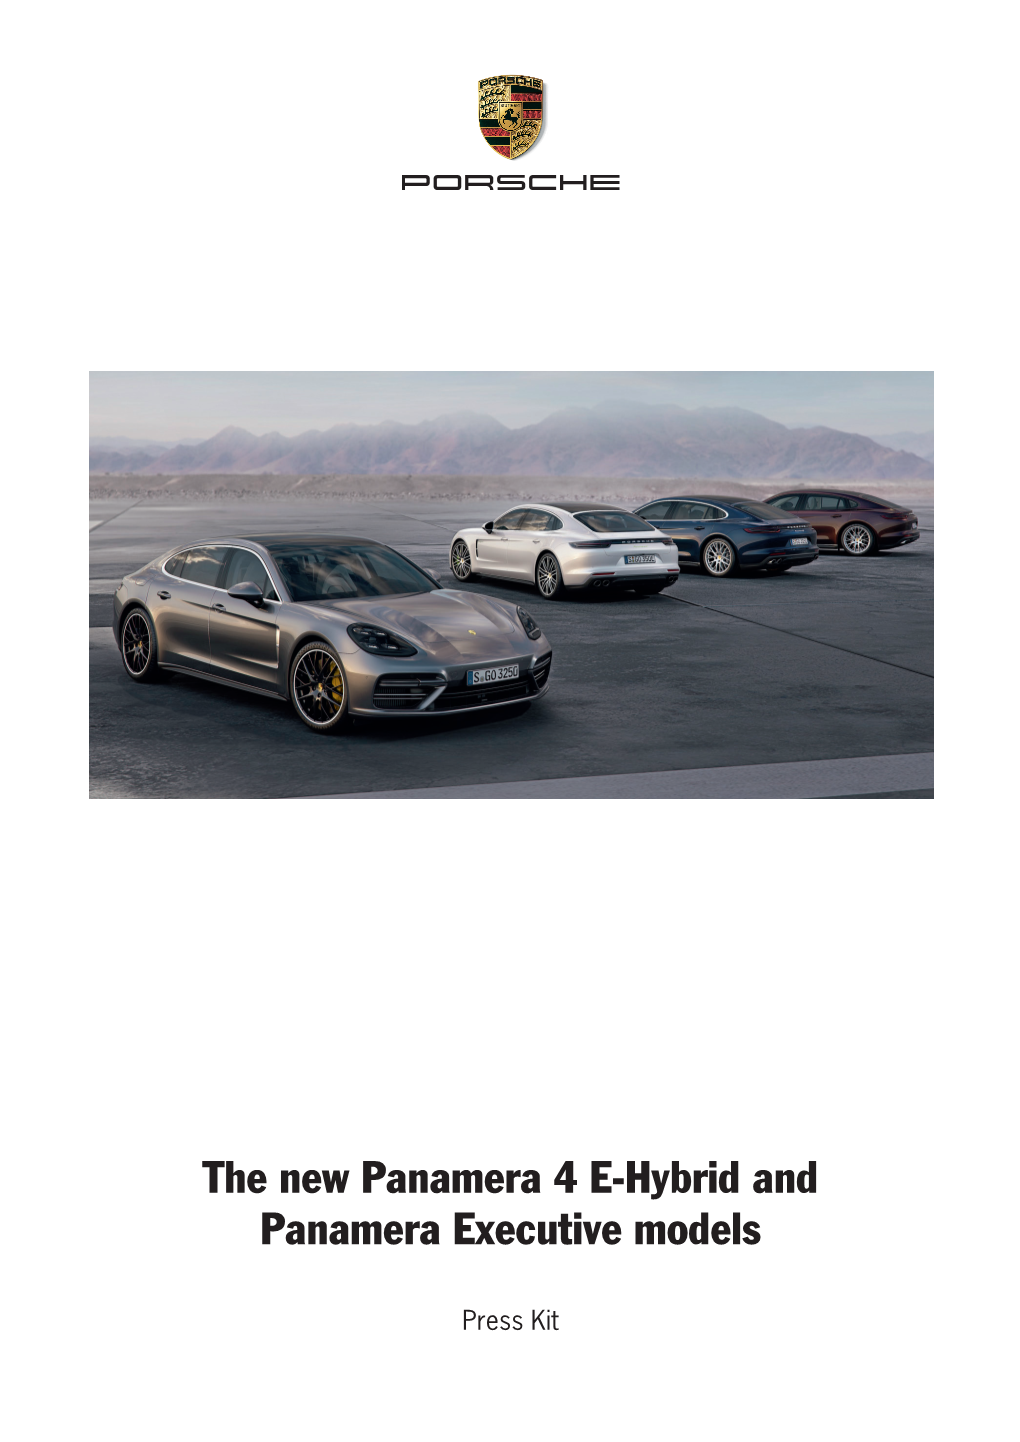 The New Panamera 4 E-Hybrid and Panamera Executive Models